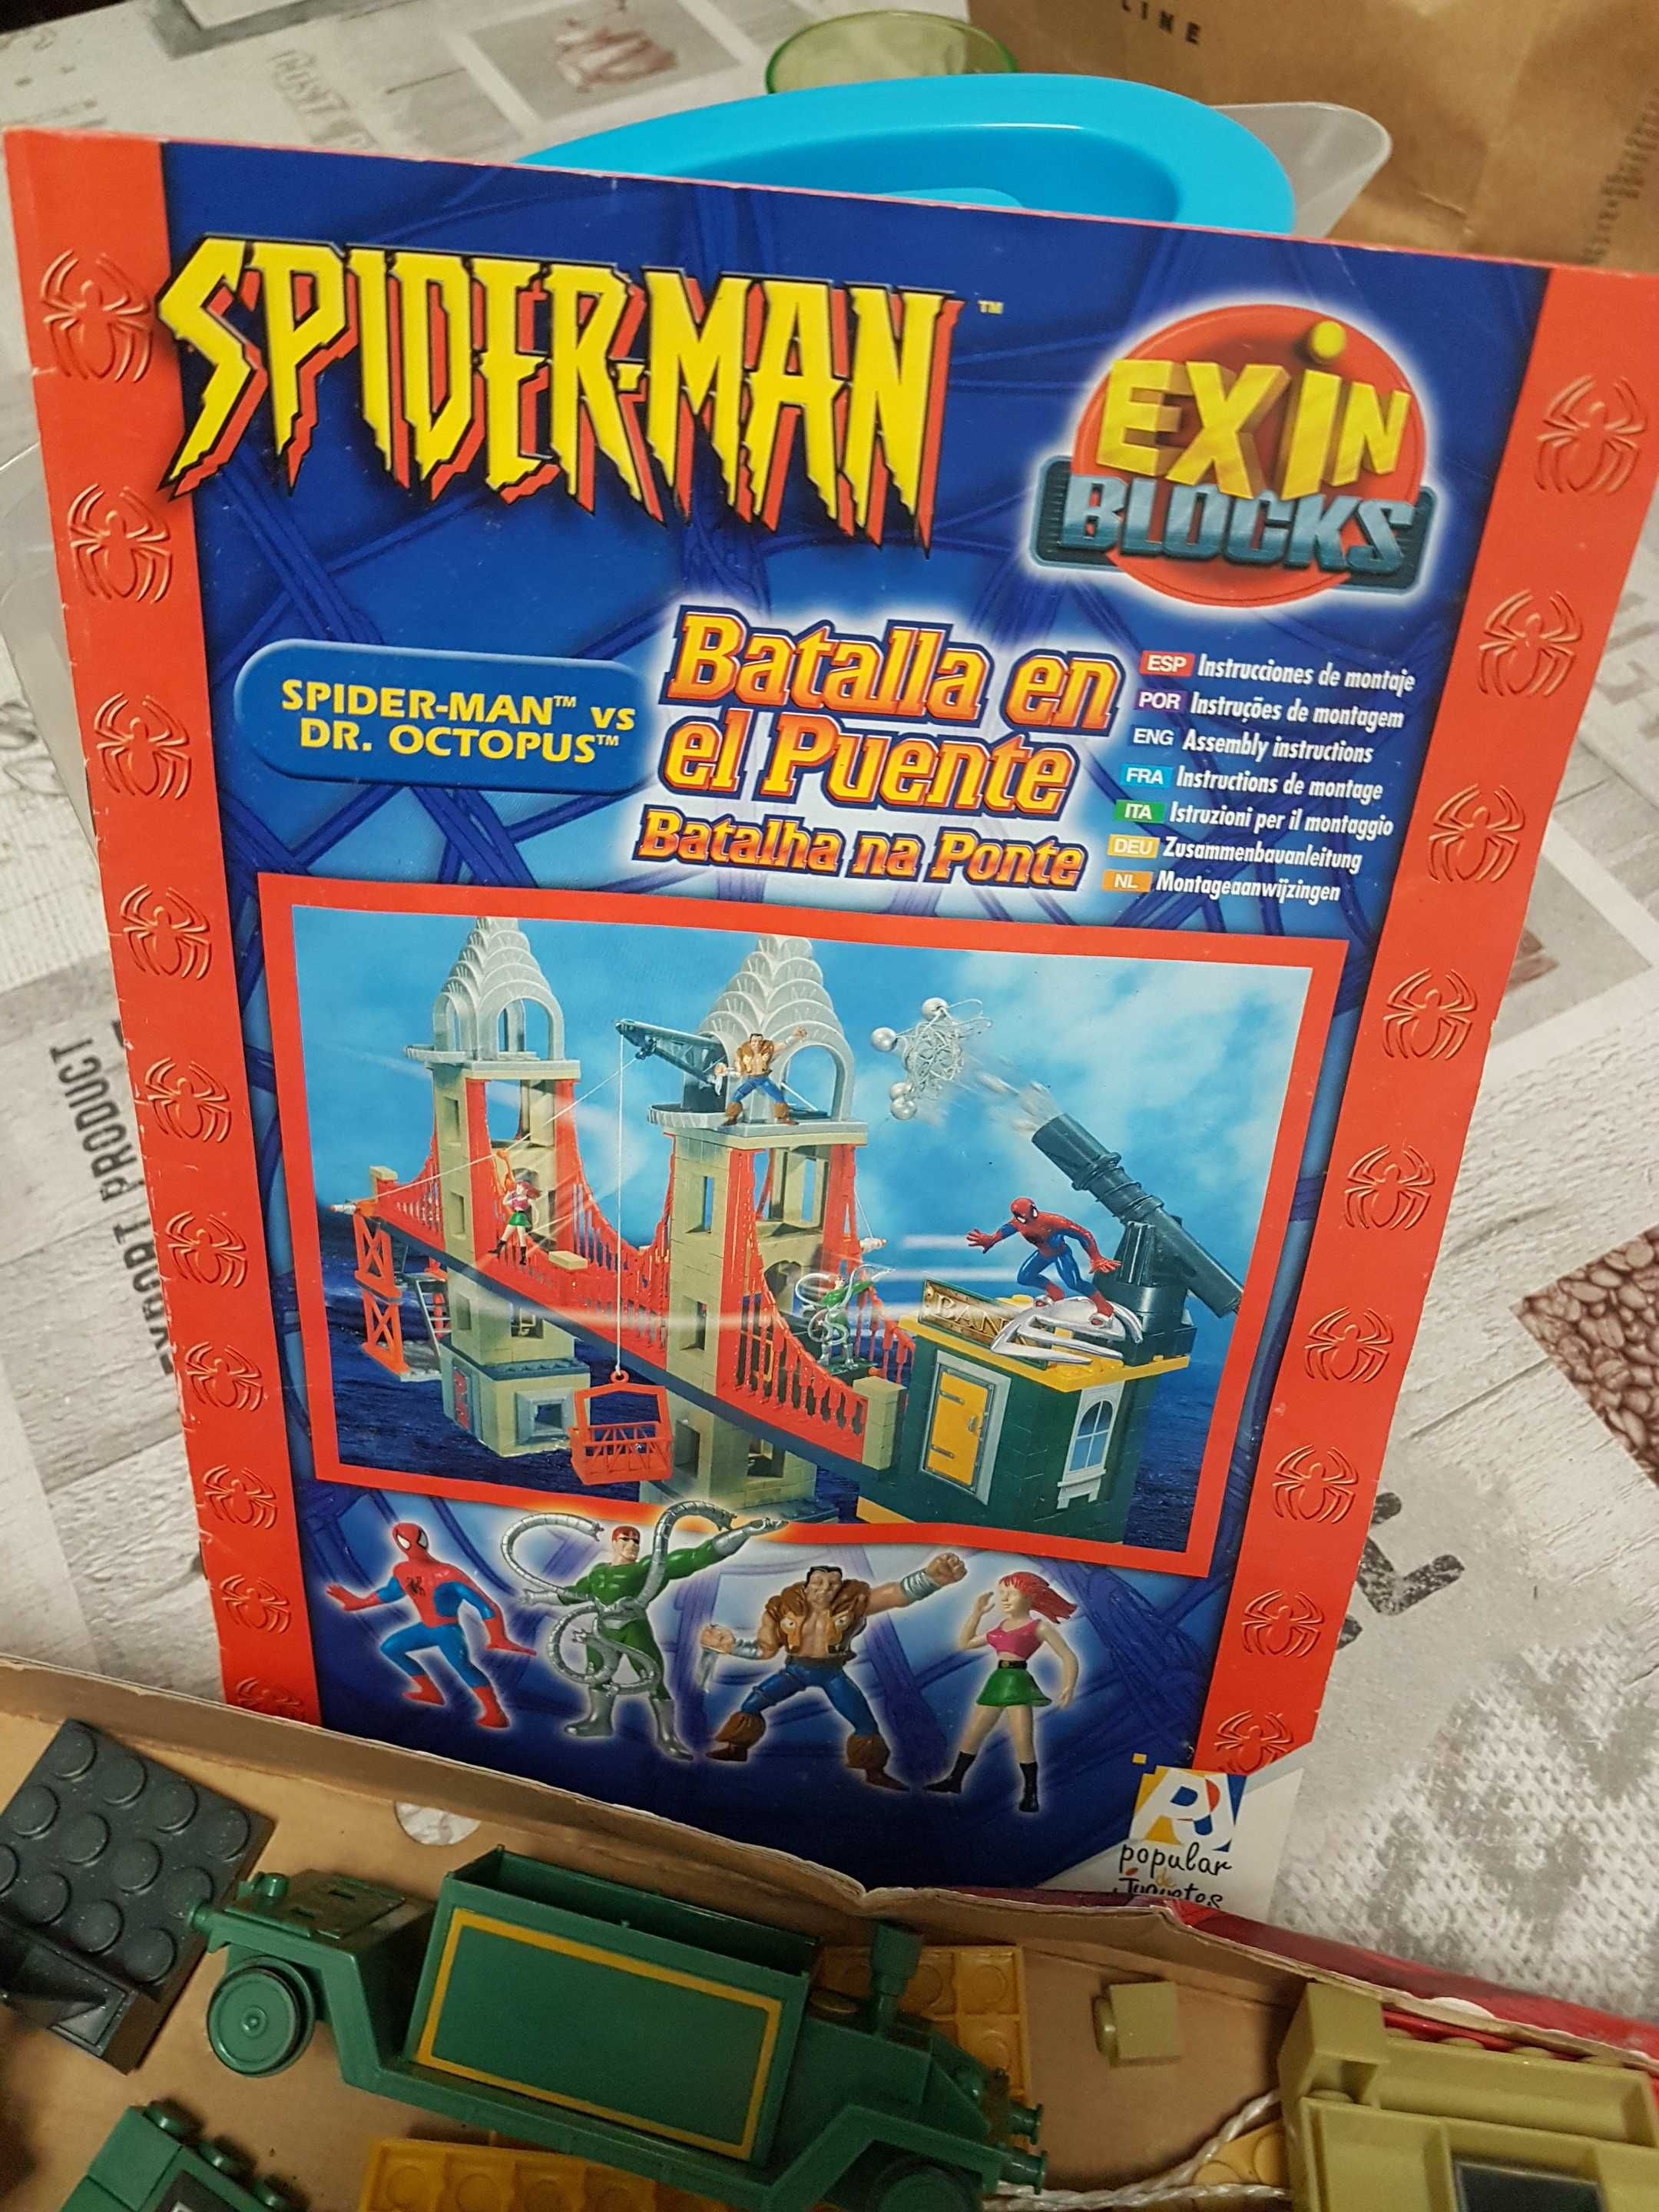 Lego Exin spiderman batalha na ponte